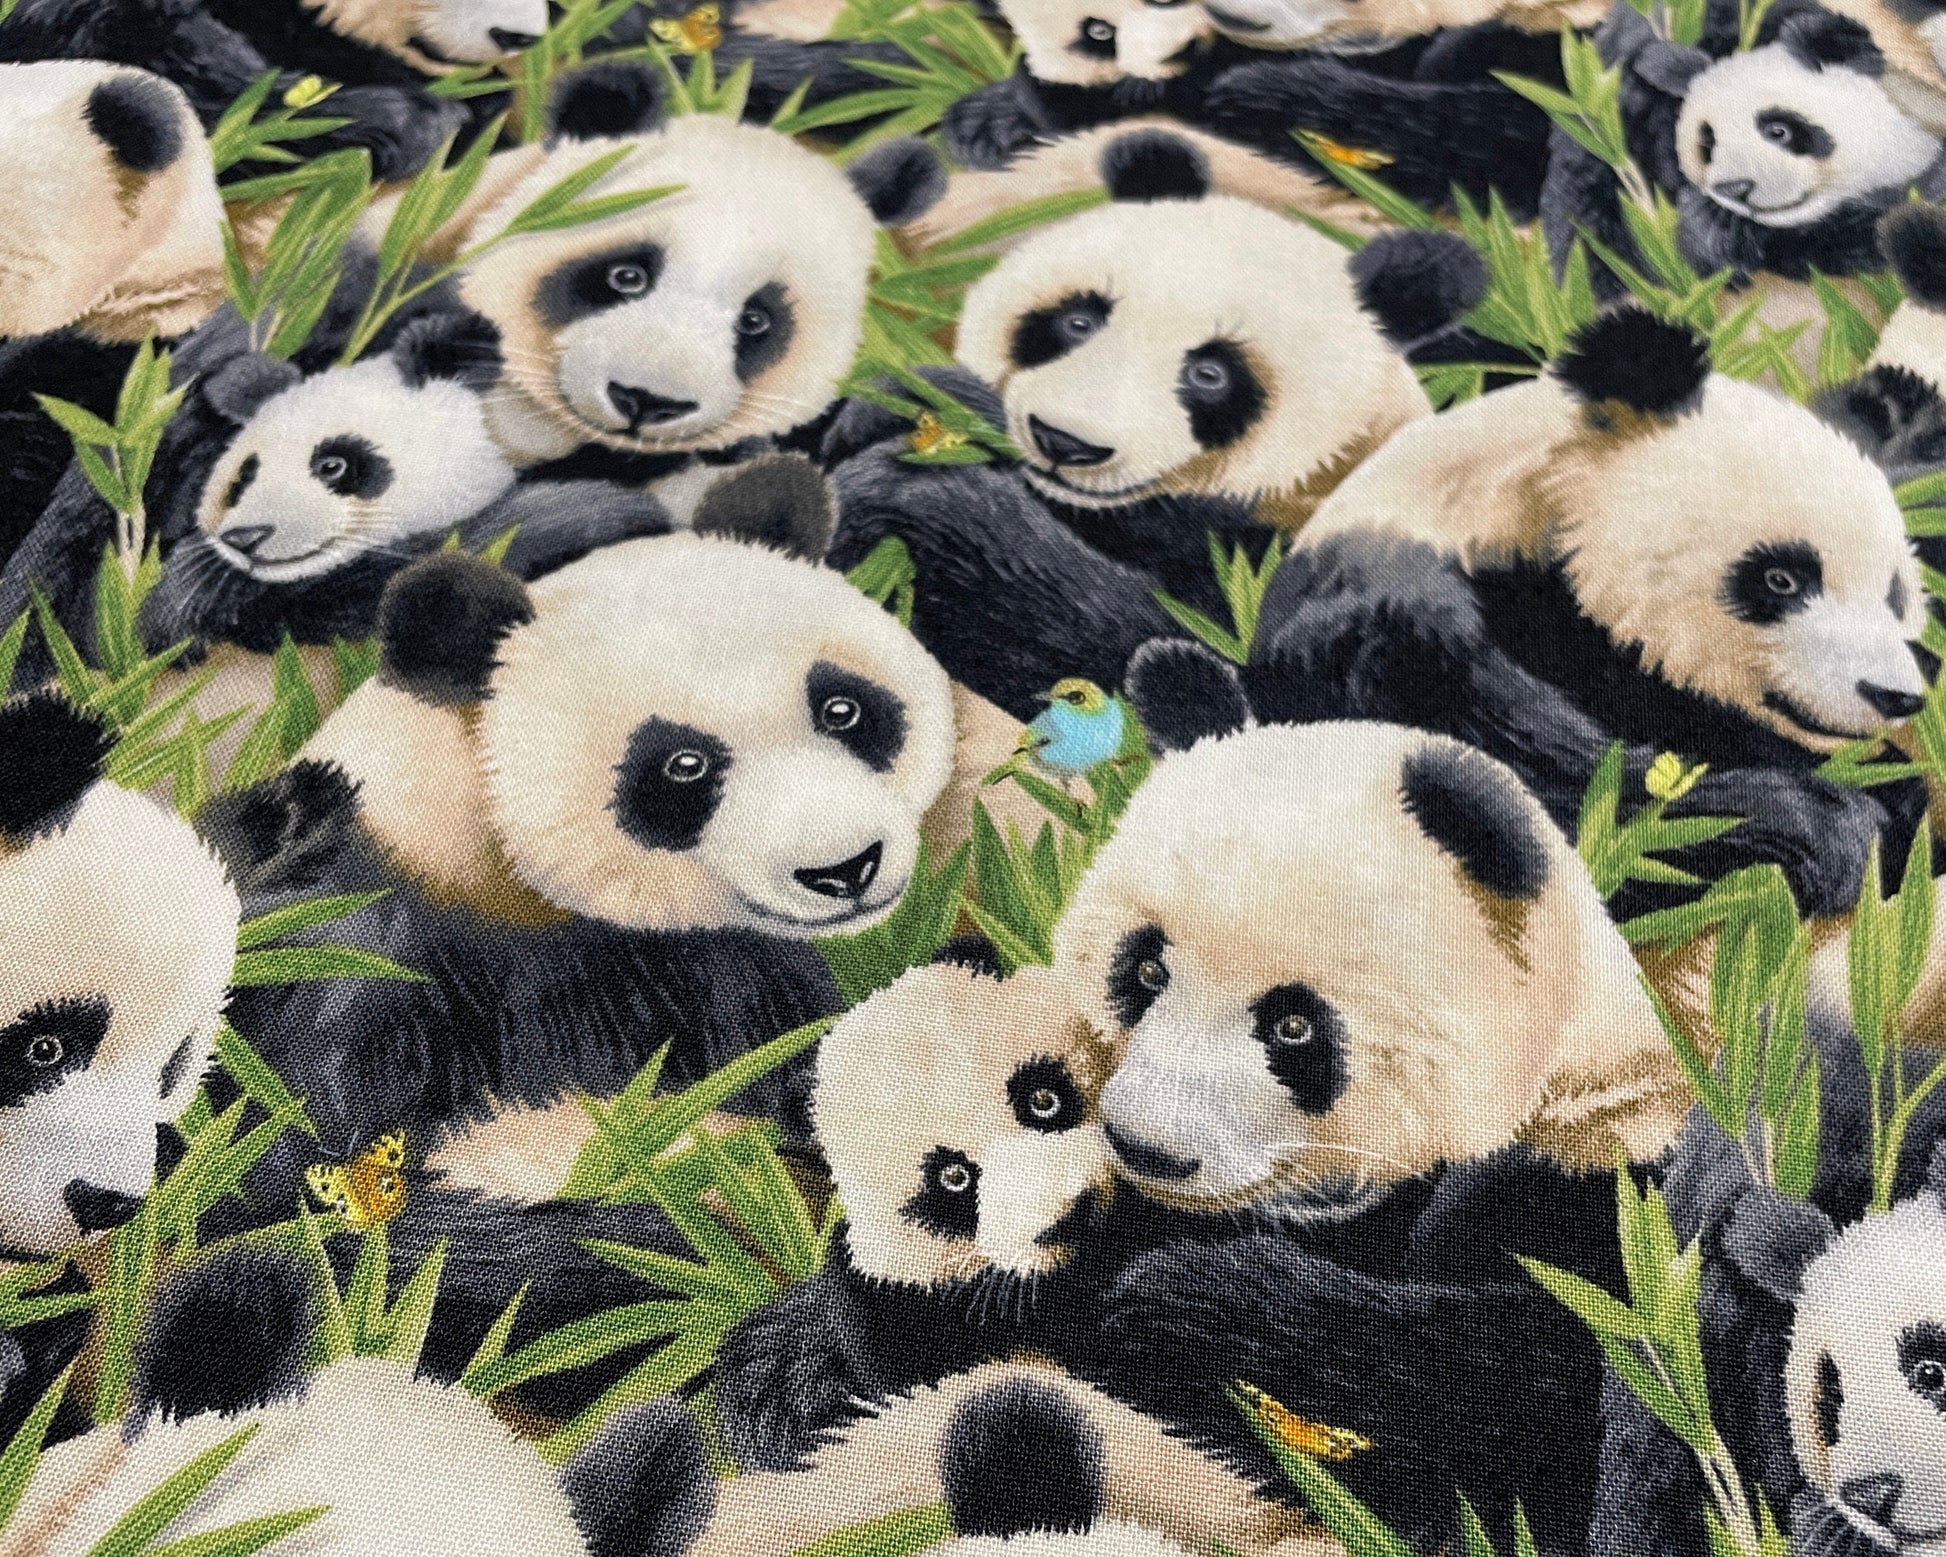 Panda Bear Fabric - 100% cotton - Elizabeth's Studio - baby panda material animal theme fabric bamboo butterfly and bird - SHIPS NEXT DAY